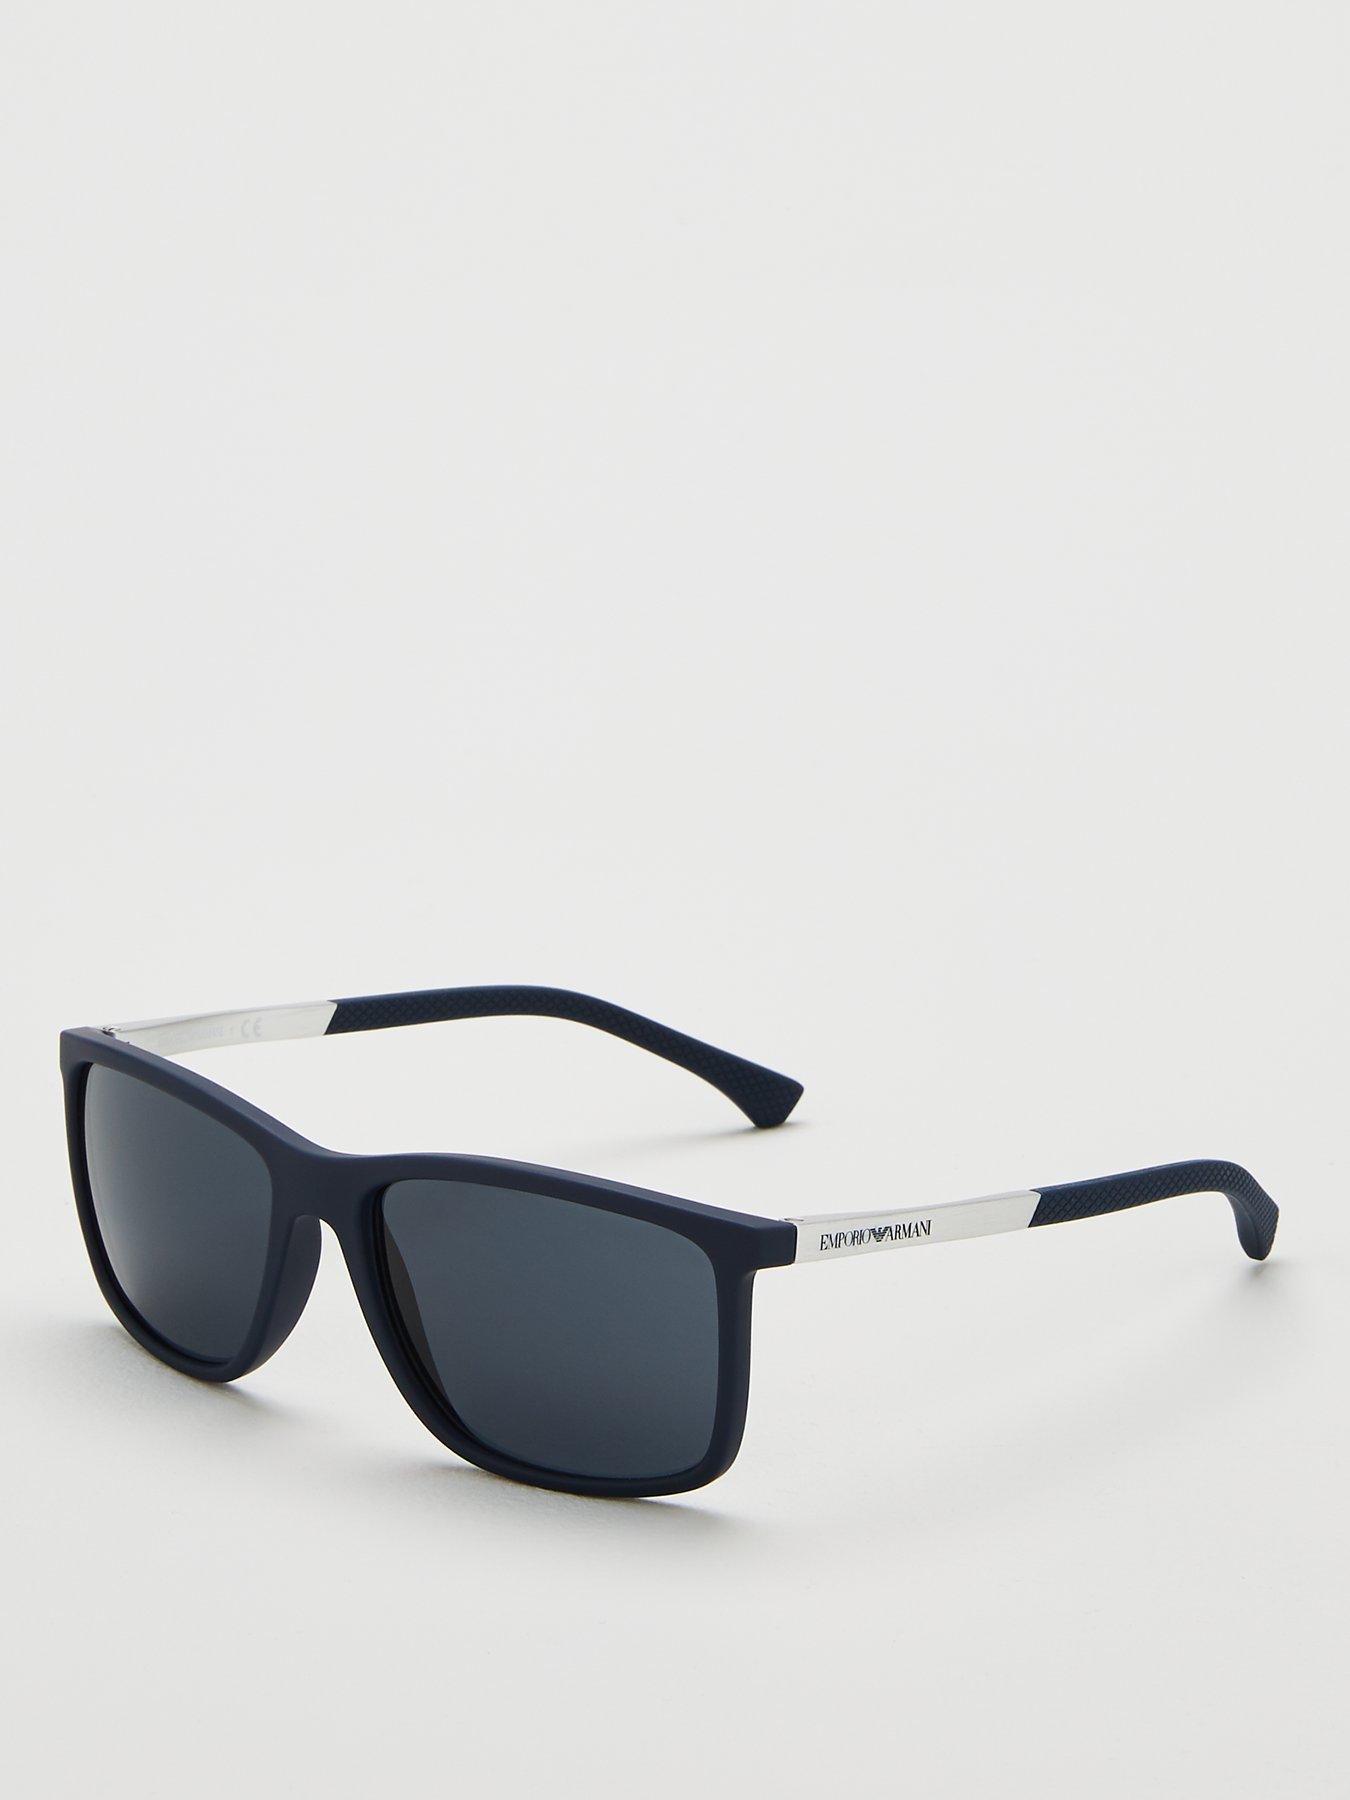 emporio armani sunglasses white frame